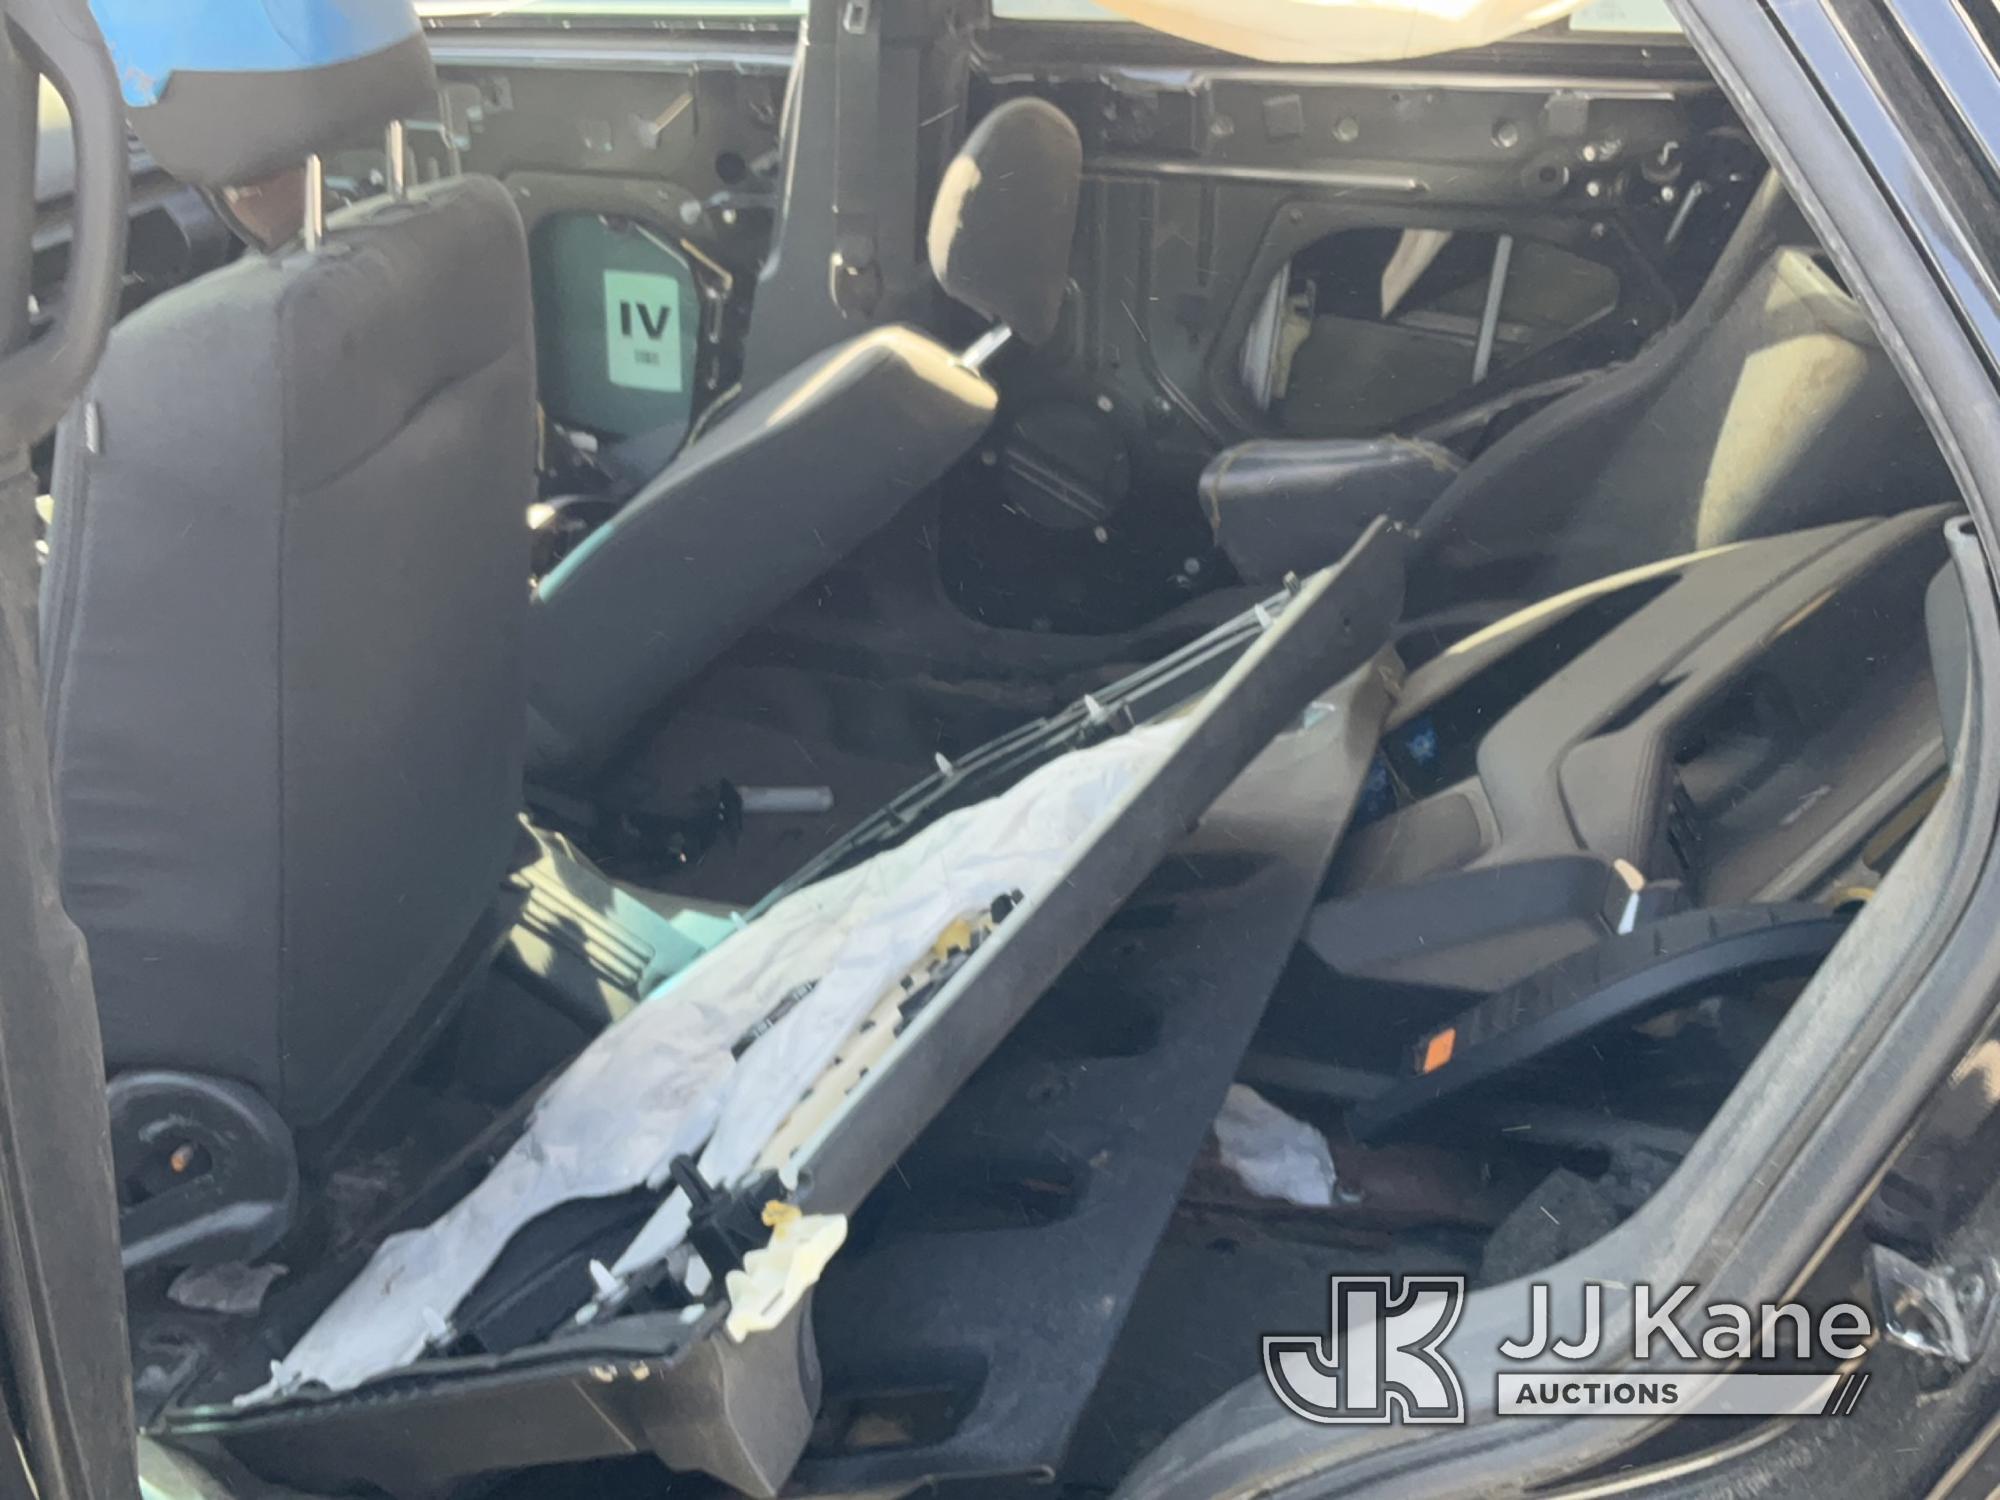 (Jurupa Valley, CA) 2019 Ford Explorer AWD Police Interceptor Sport Utility Vehicle Not Running , No